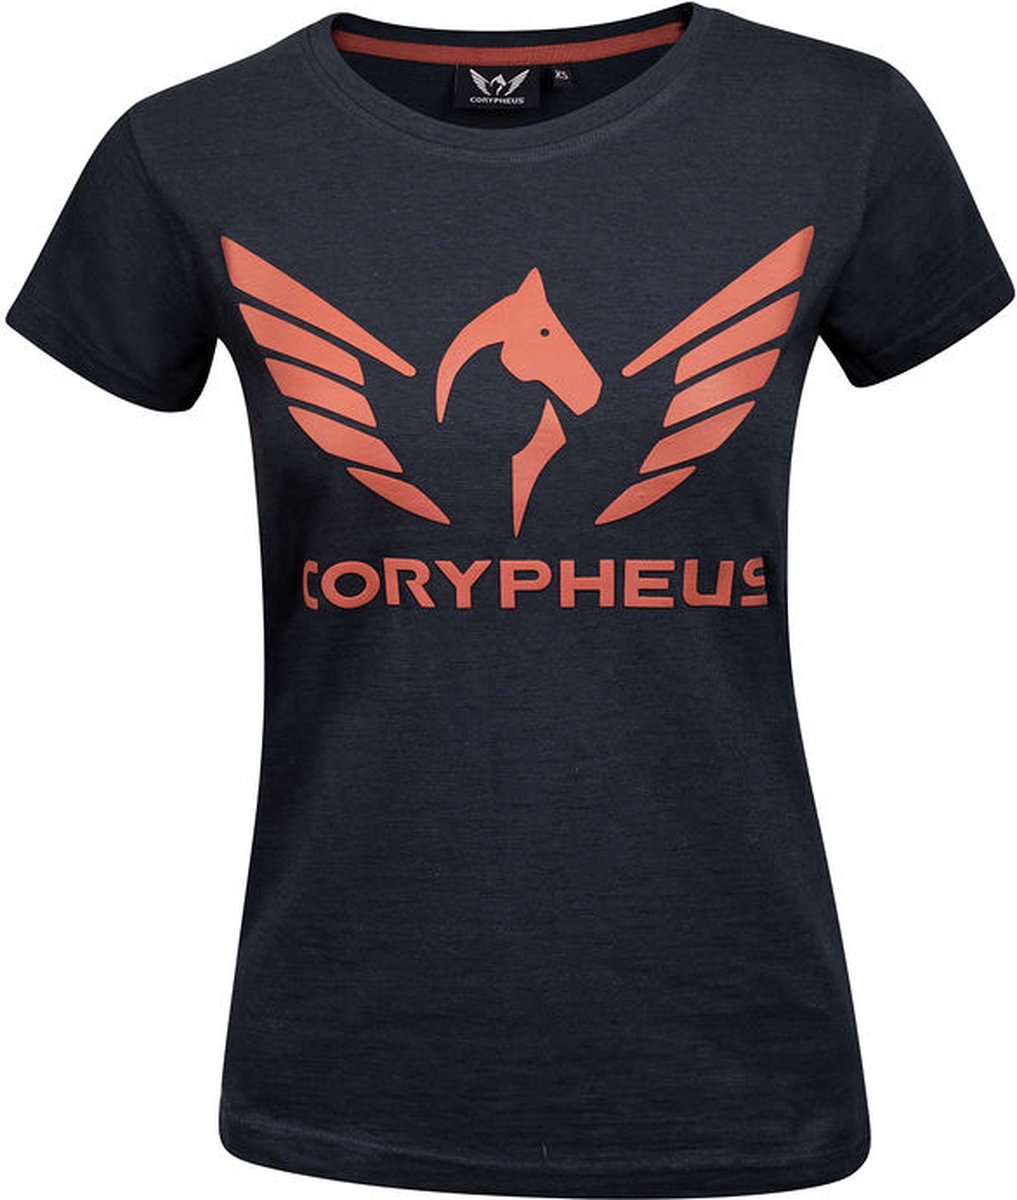 Corypheus Antracite Women's T-Shirt - XLarge